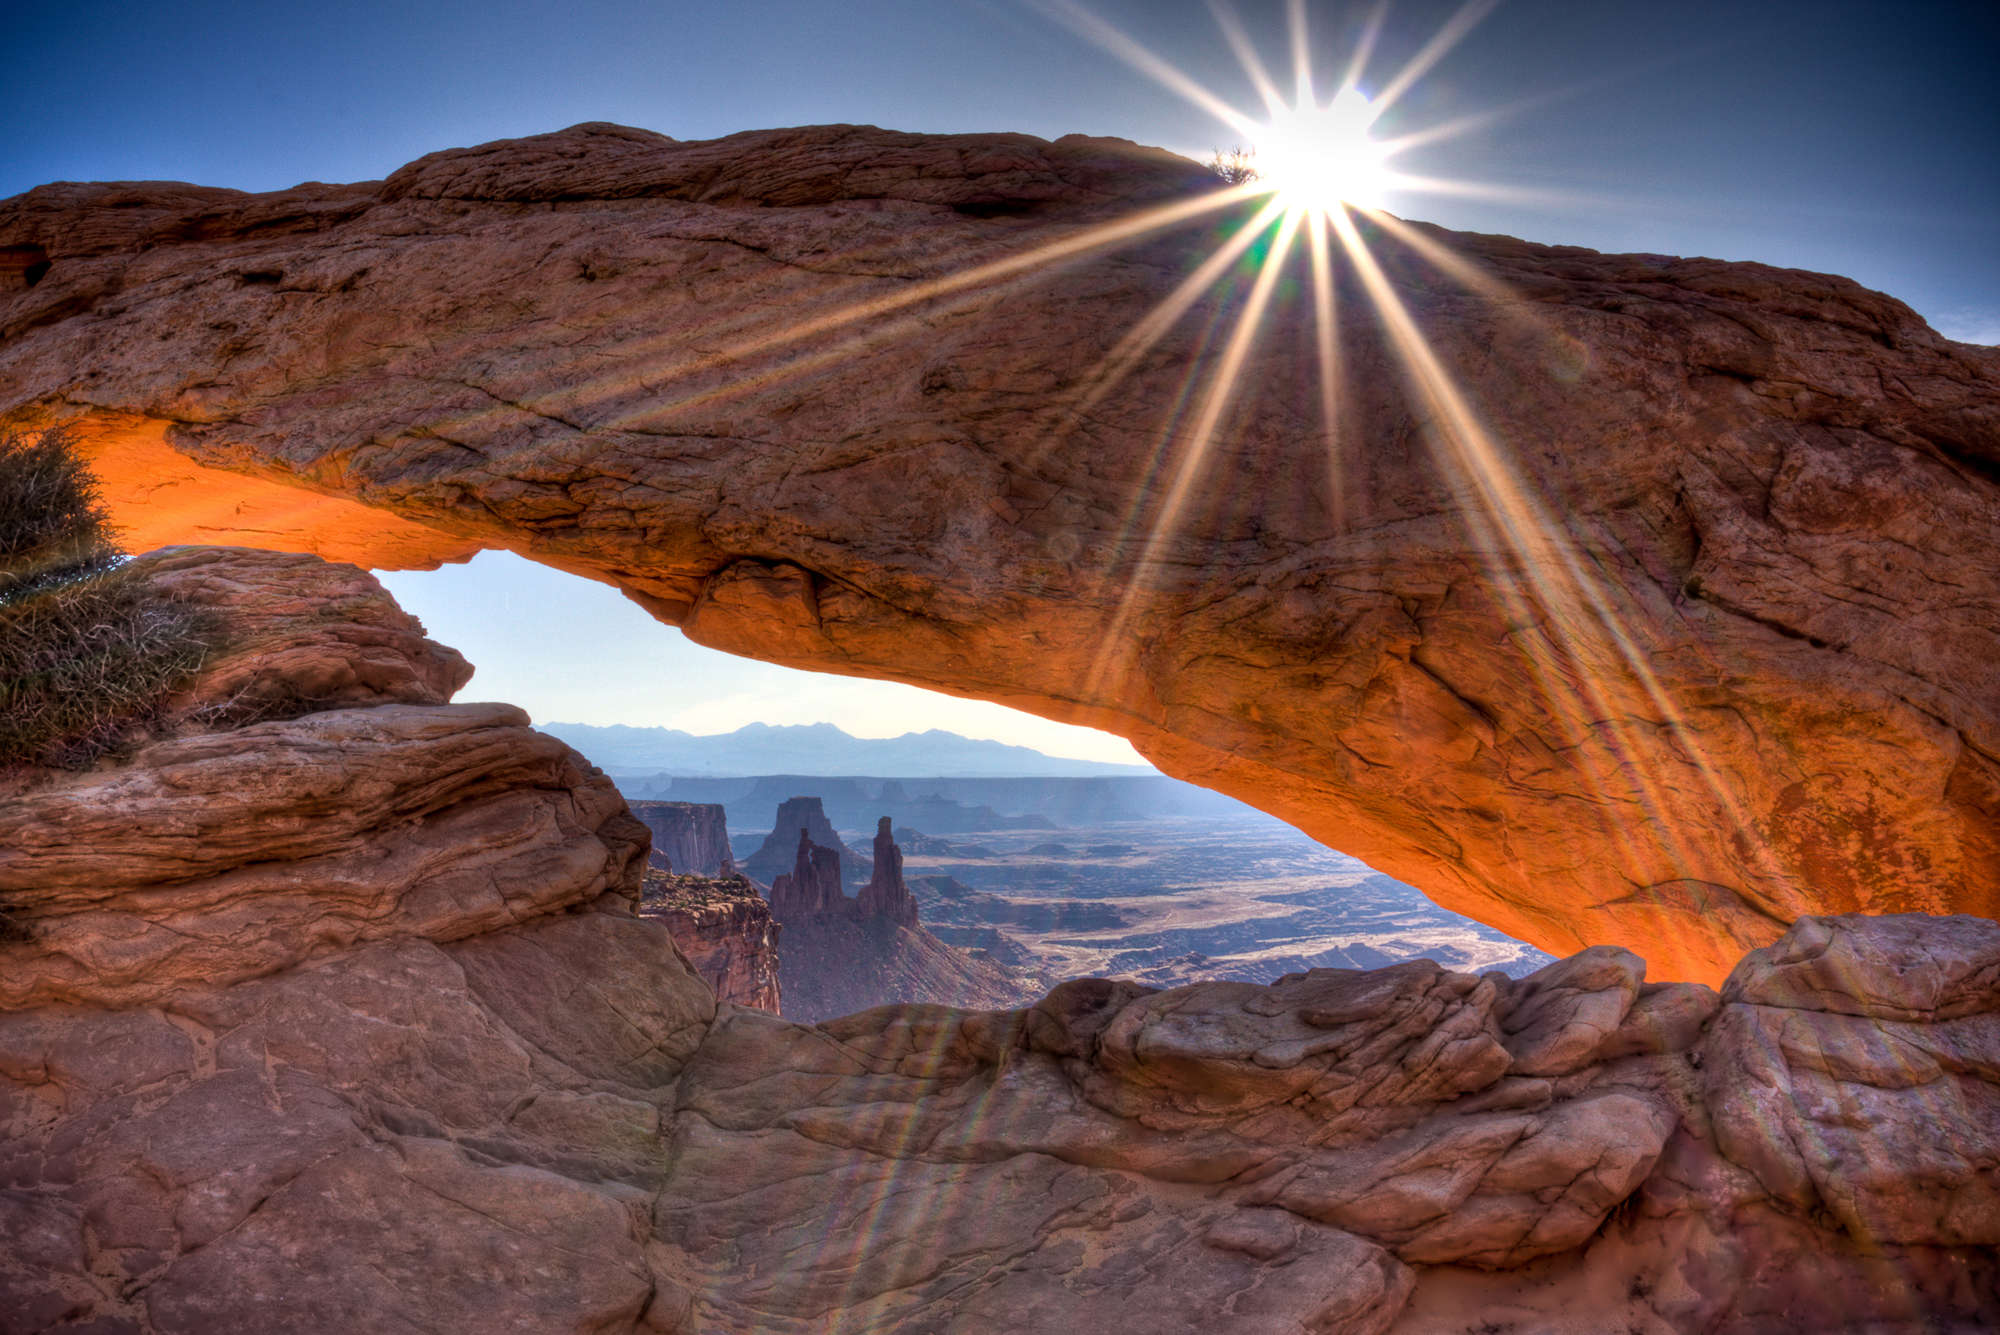             Fototapete Canyon mit Mesa Arch – Perlmutt Glattvlies
        